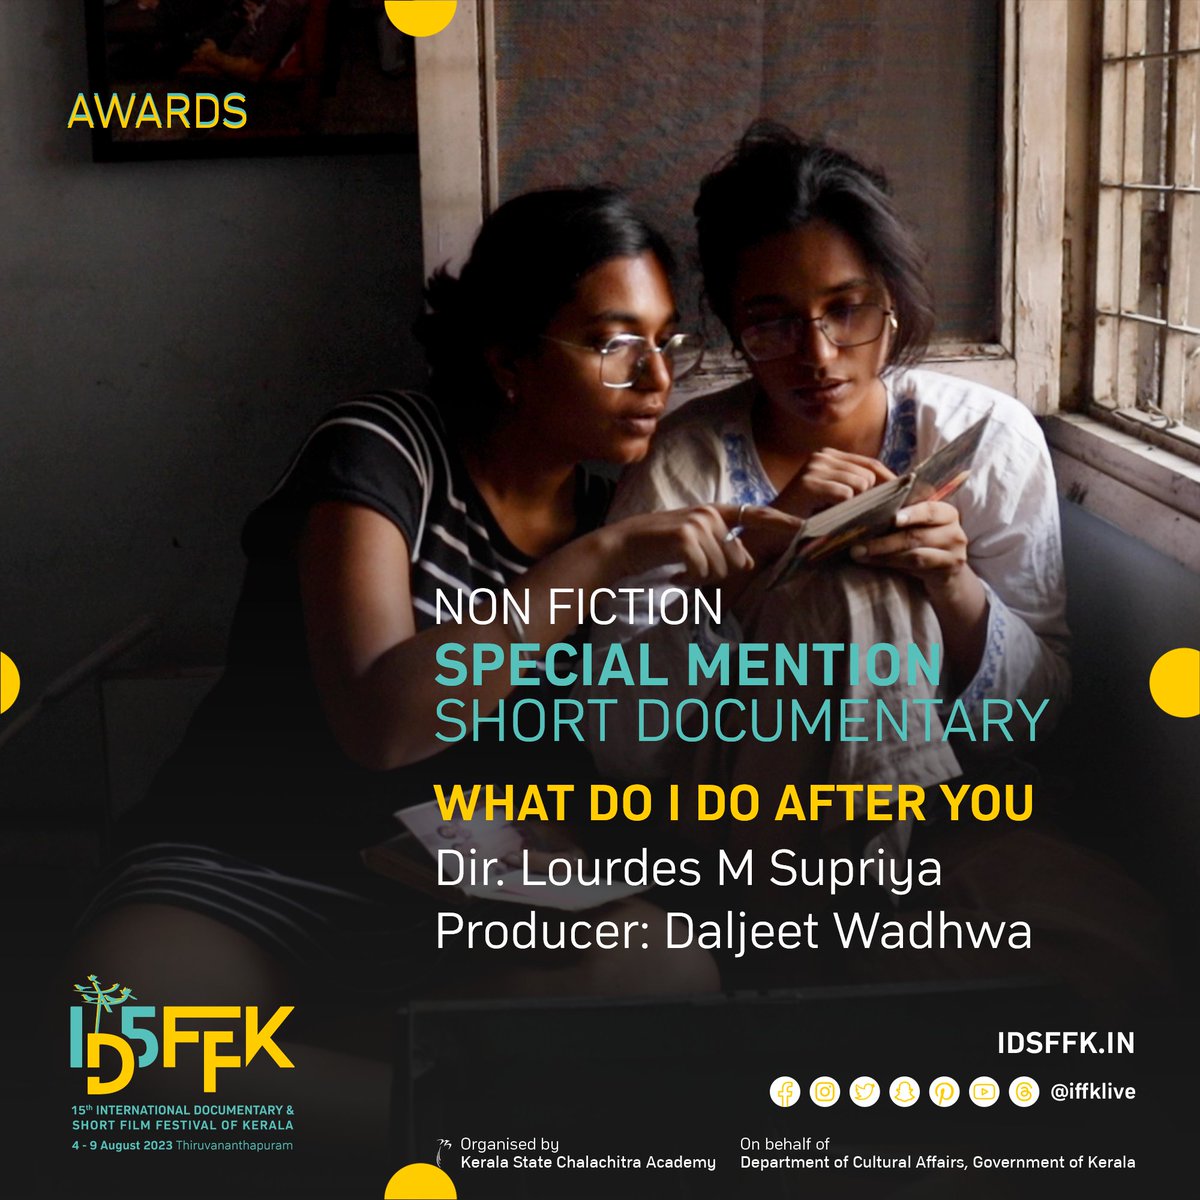 Short Documentary: Special Mention
WHAT DO I DO AFTER YOU 
Director: Lourdes  M Supriya
Producer: Daljeet Wadhwa

#IDSFFK #15IDSFFK #IDSFFK2023 #15IDSFFKAwards #Awards #KSCA #ChalachitraAcademy #ShortDocumentary